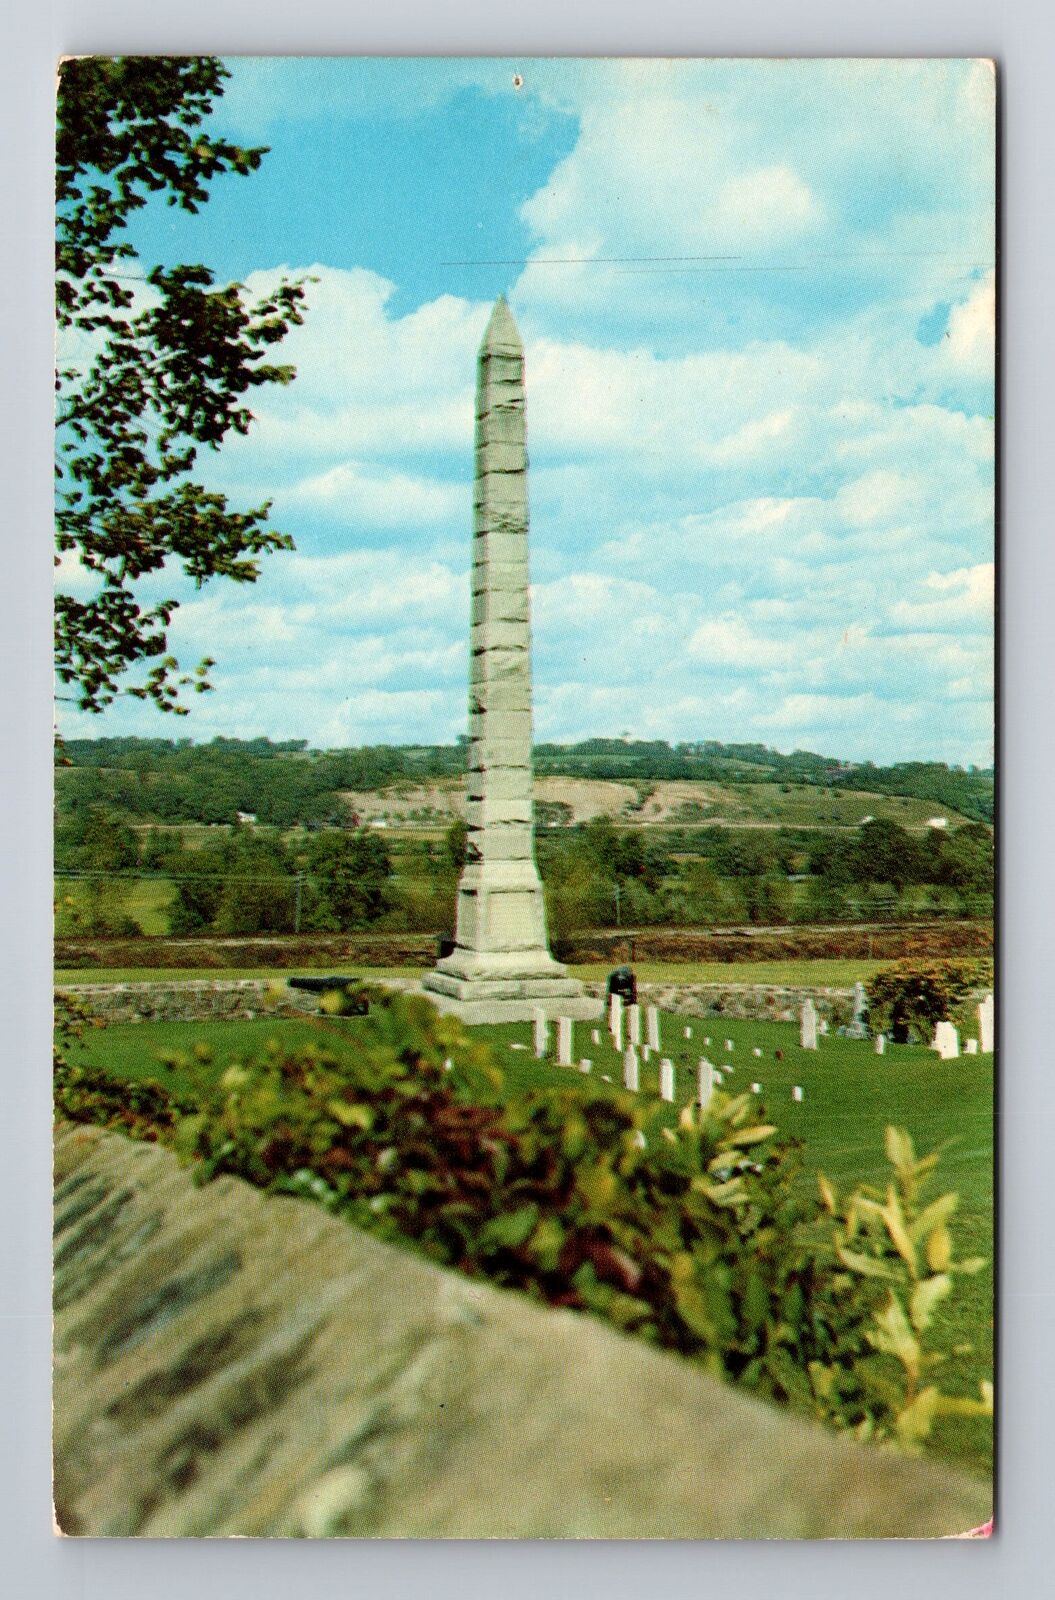 Little Falls NY-New York, General Herkimer Monument, Antique, Vintage Postcard